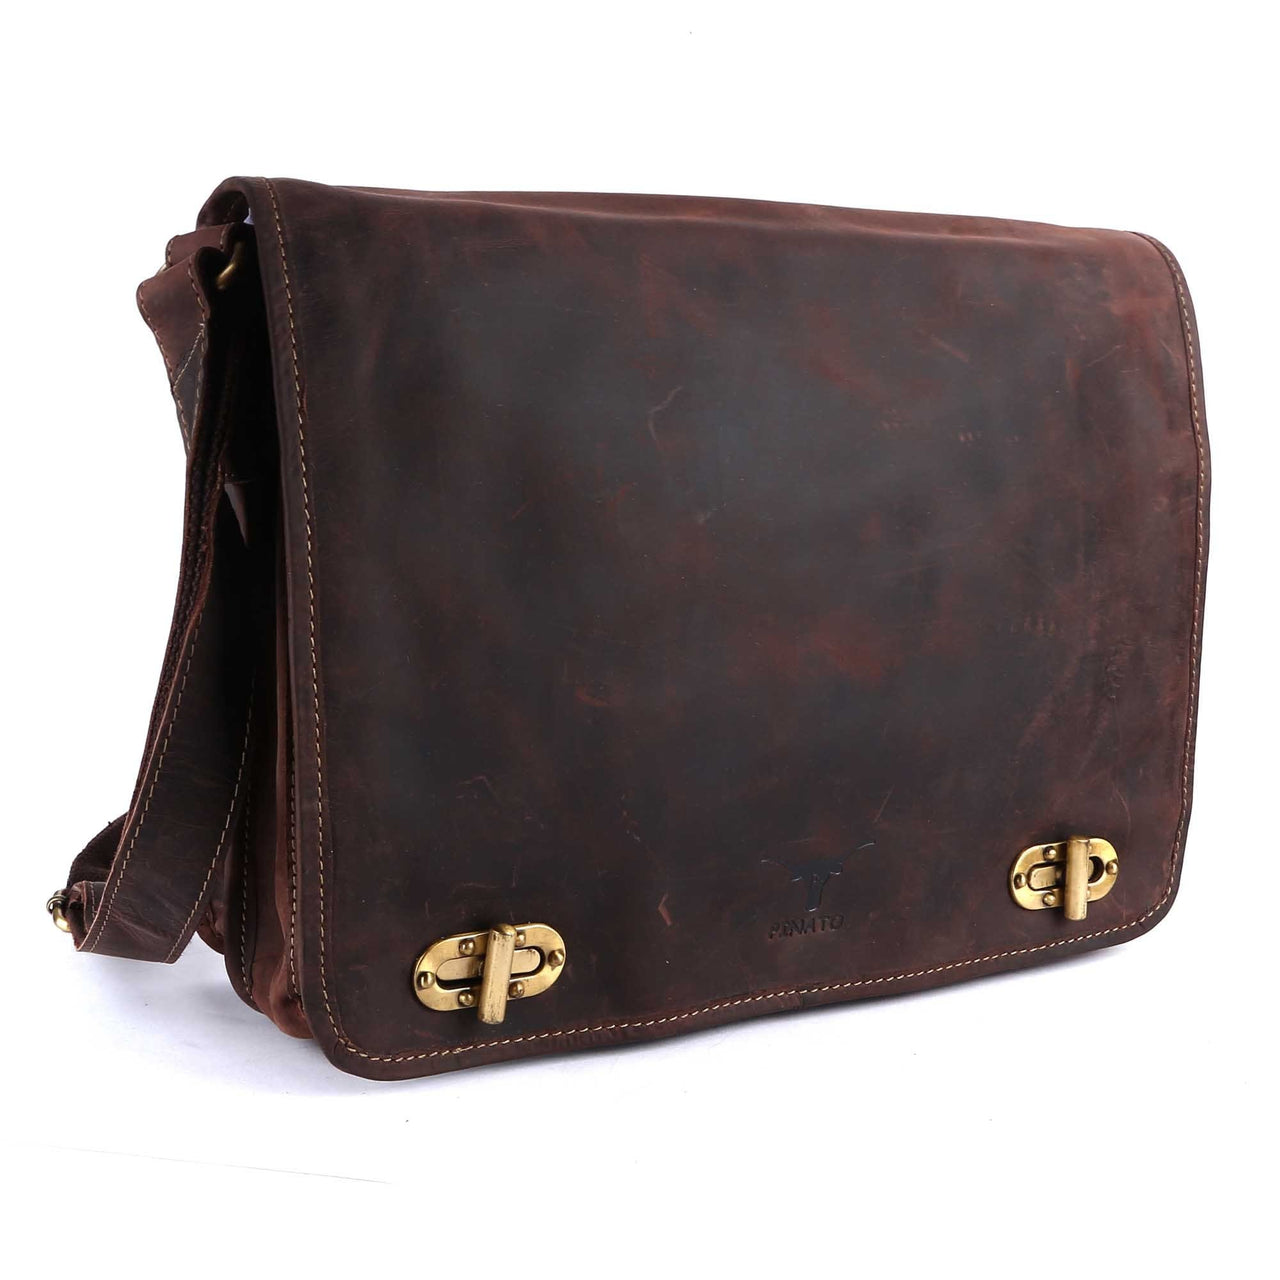 Pinato Genuine Leather Laptop Bag Brown for Men & Women (PL-2418)